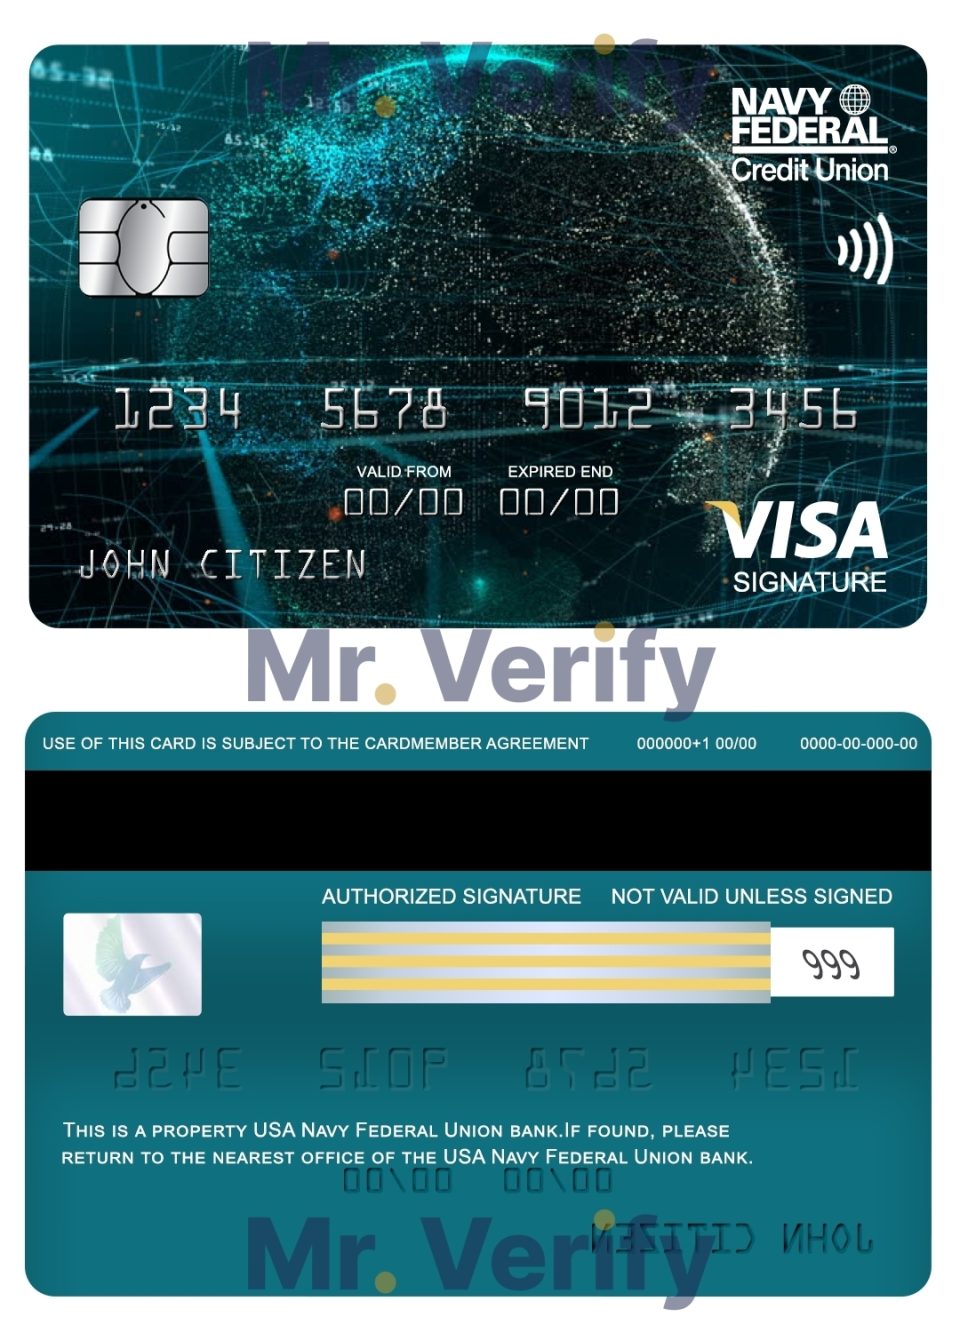 Fillable USA Navy Federal Union bank visa signature card Templates | Layer-Based PSD